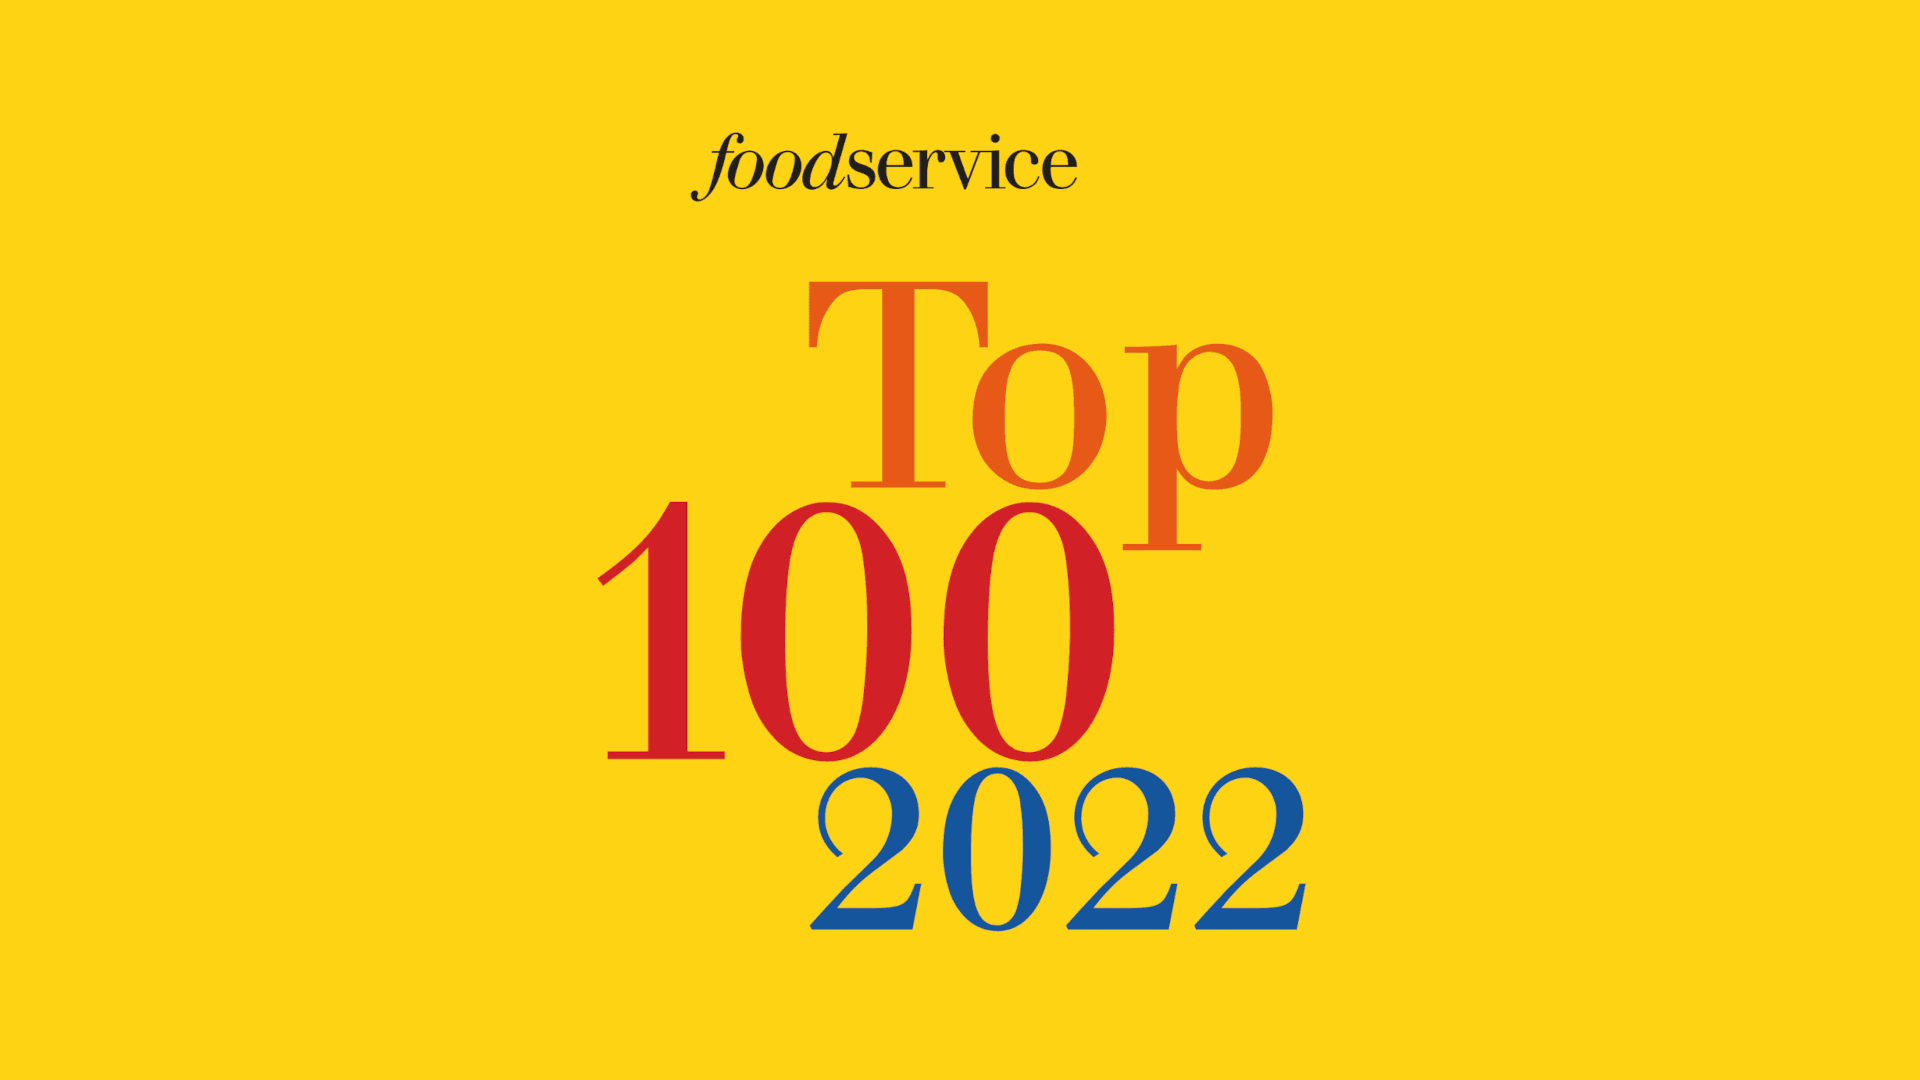 foodservice-Top-100-2022-Logo-8003.png